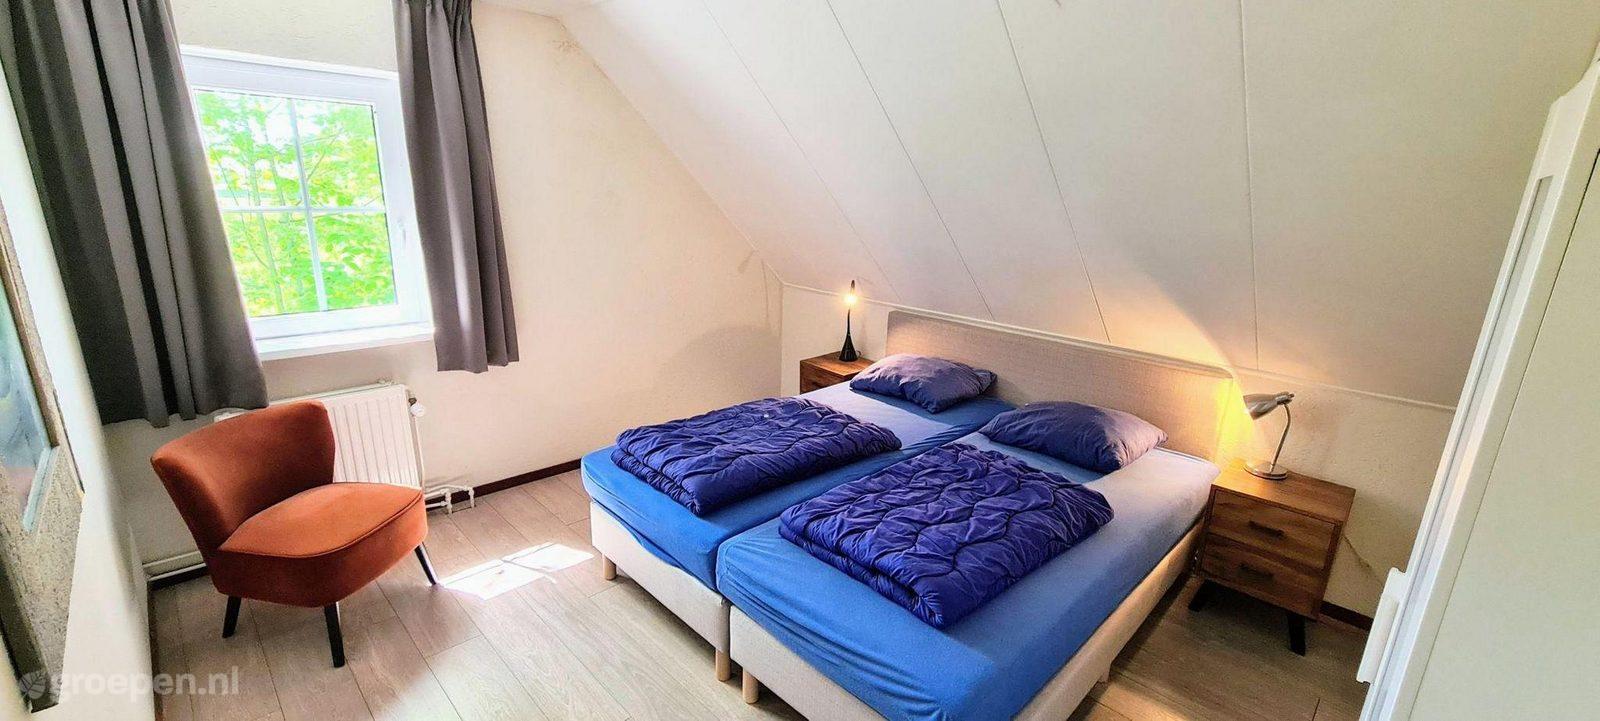 Group accommodation Vrouwenpolder (copy)